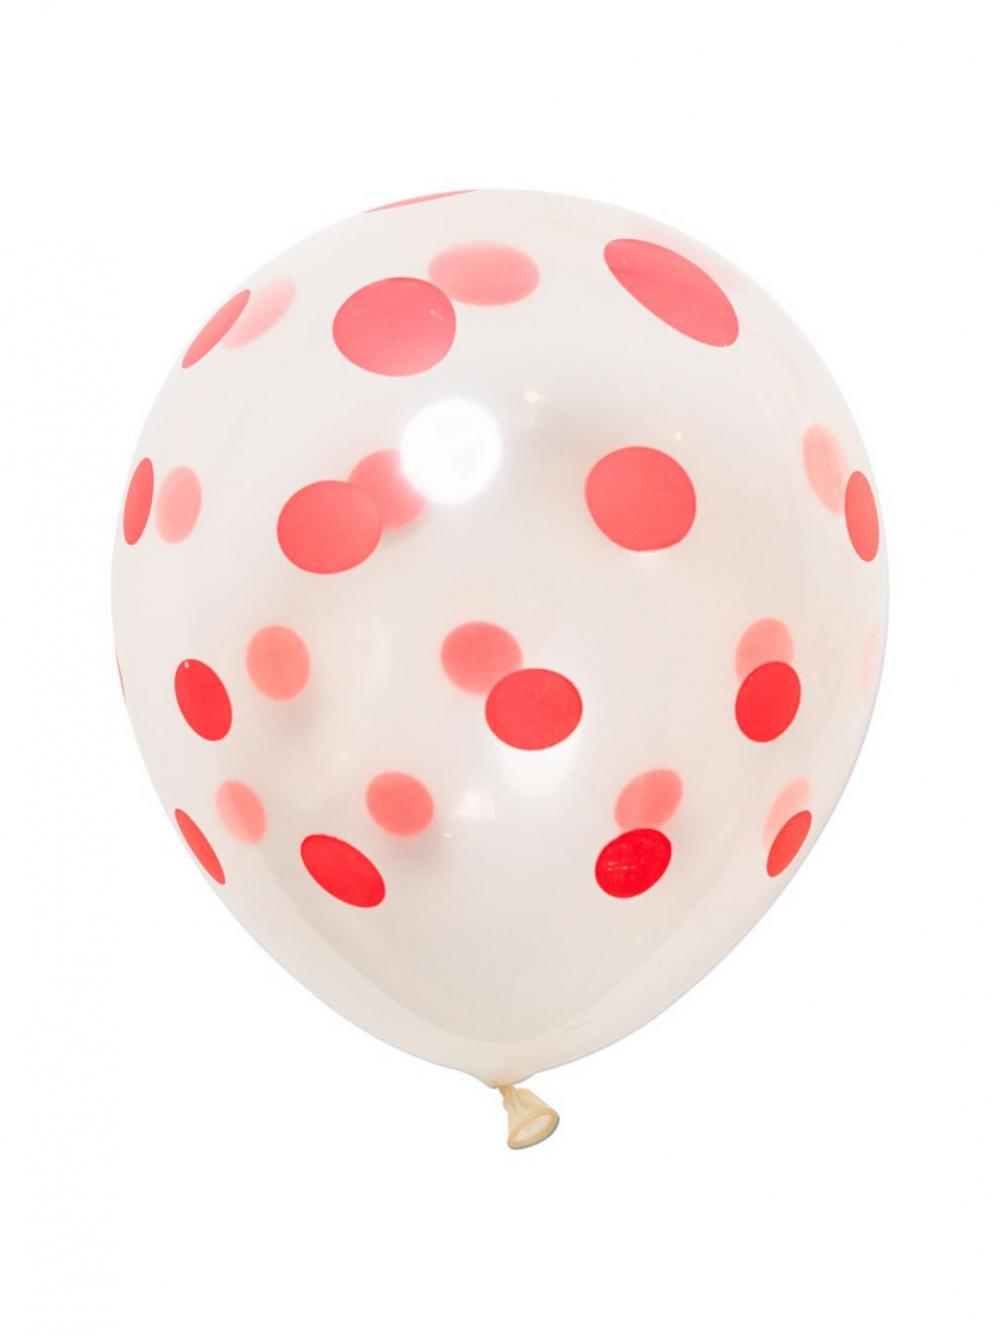 12 Inch Standard Polka Dot Balloons Clear Balloon Red Dot (10PCS)